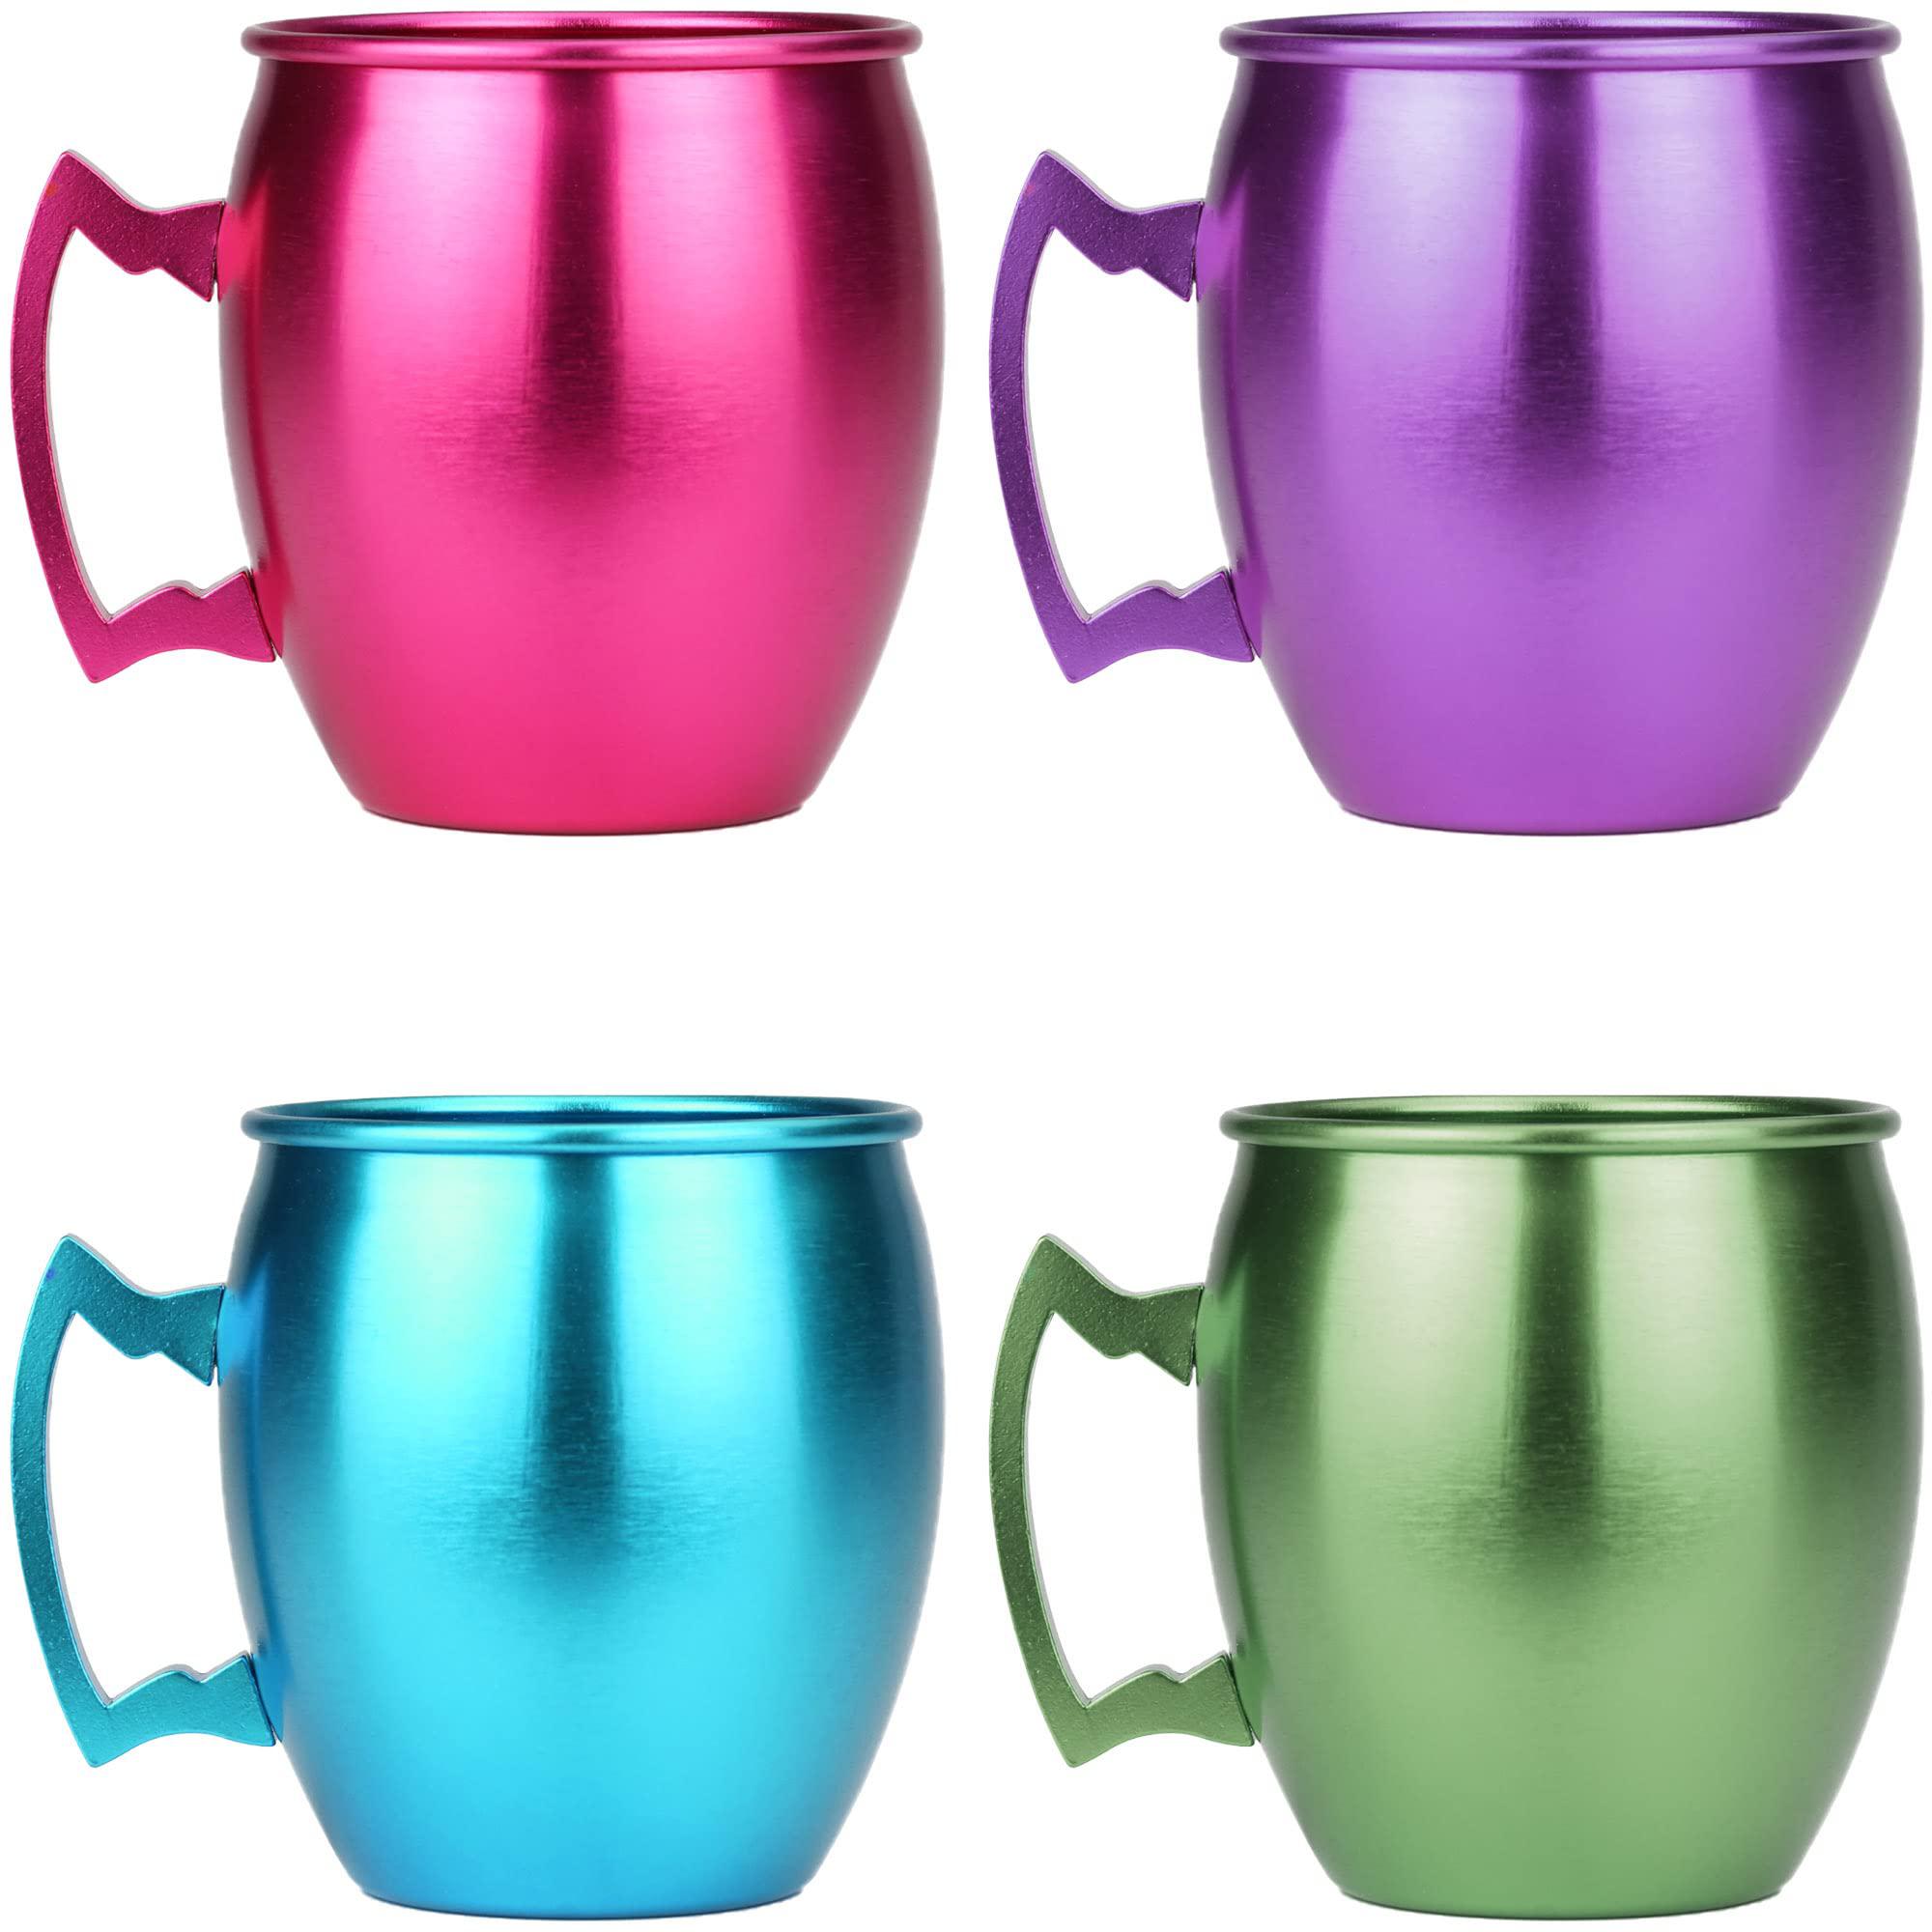 arora aluminum cups, metal anodized multi-colored blue, red, green, purple moscow mule mug set , aluminum cocktail drink mug 